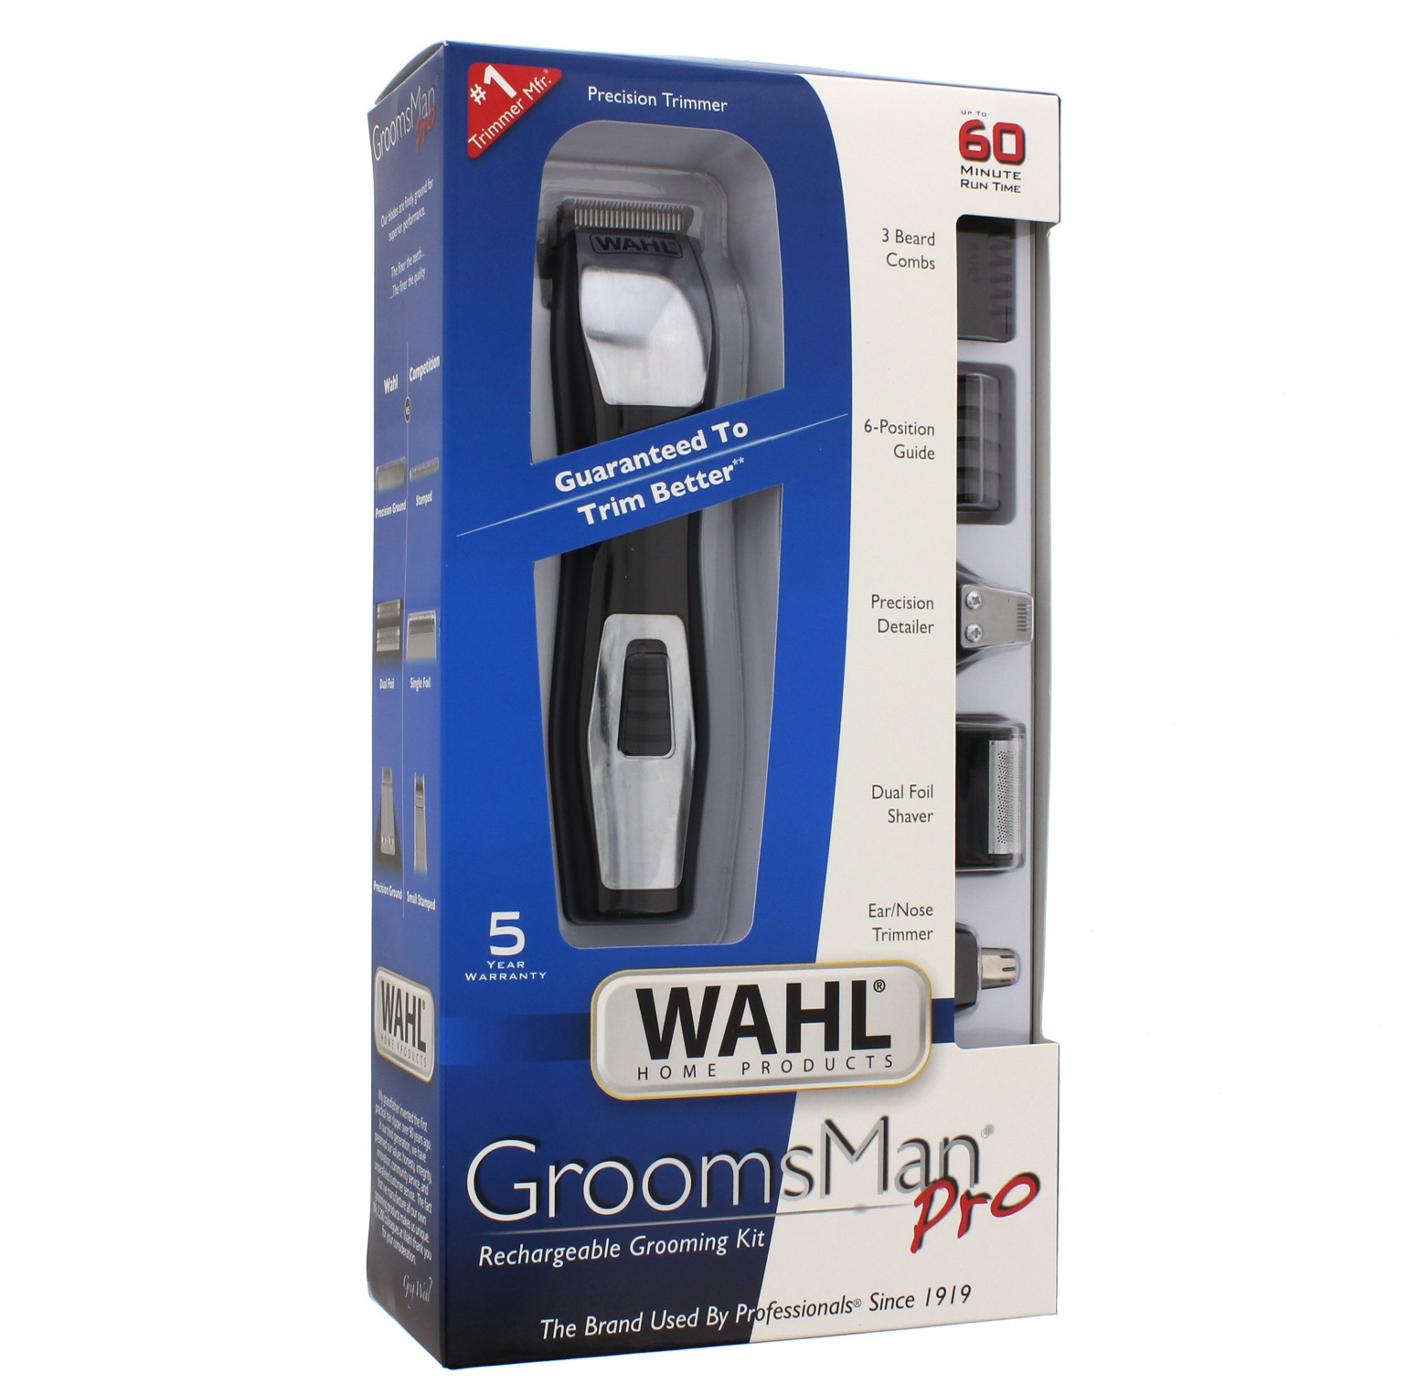 Wahl Groomsman Pro Rechargeable Grooming Kit; image 1 of 2